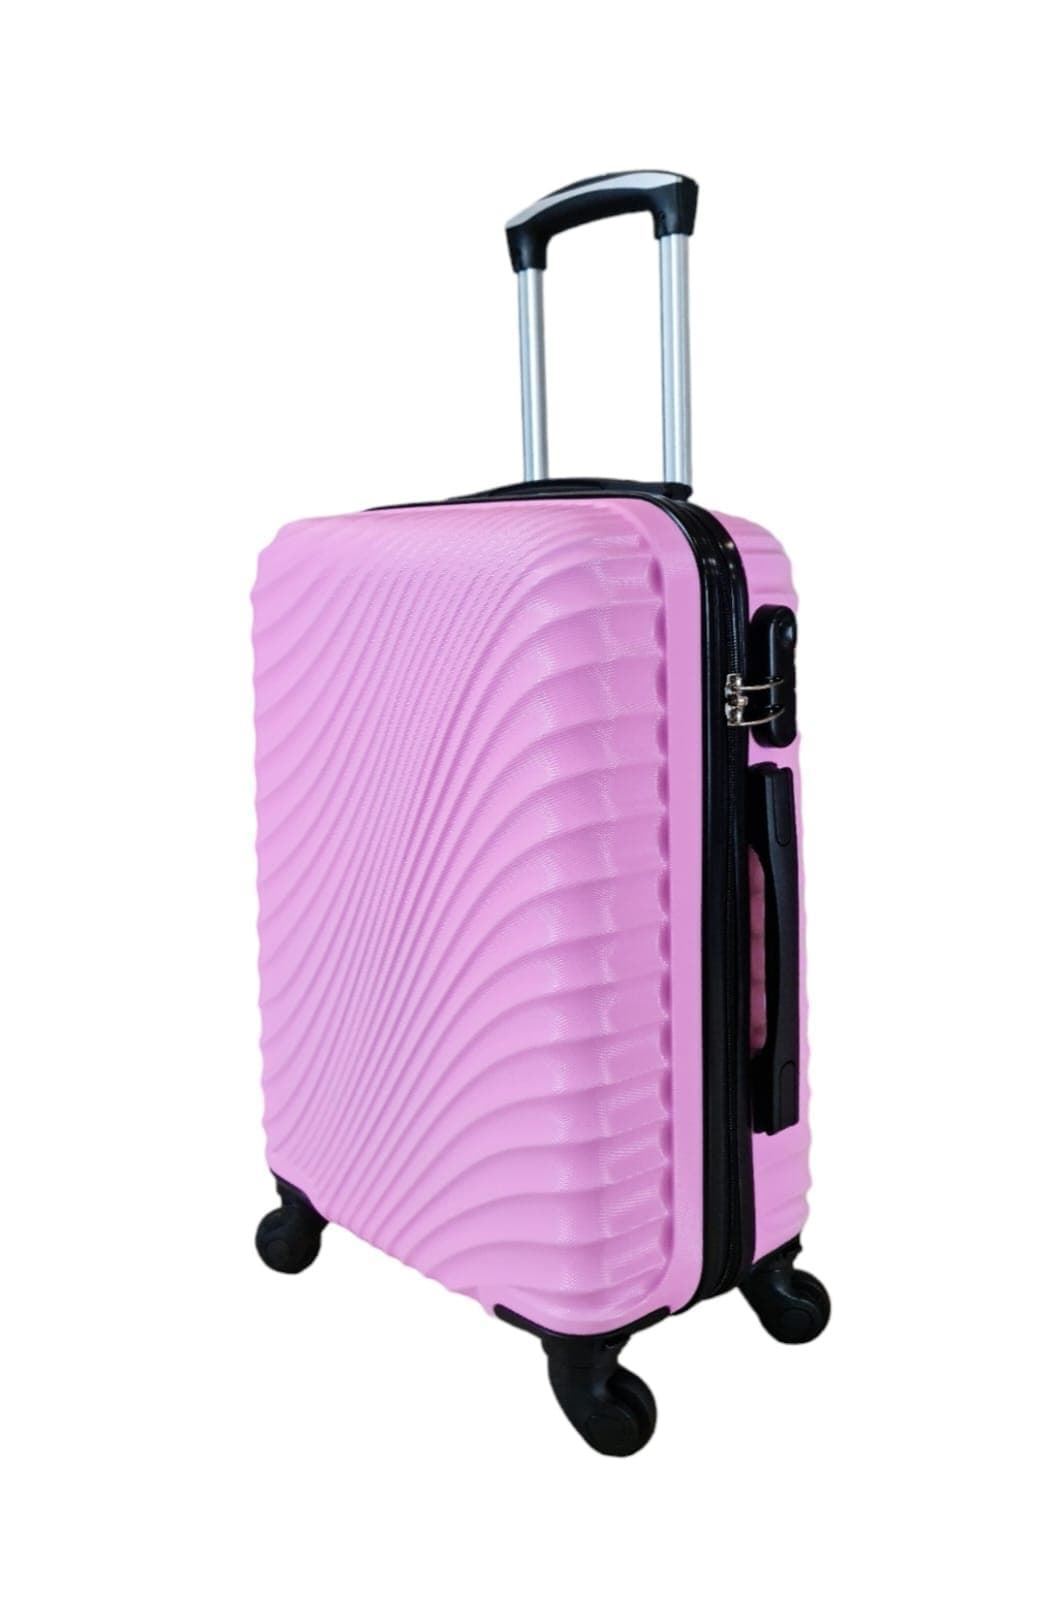 Maleta de Viaje Tamaño Cabina VIP Peso 10 kilos Material ABS Barata Medidas 55x40x20 color Rosa Barbie - Imagen 2